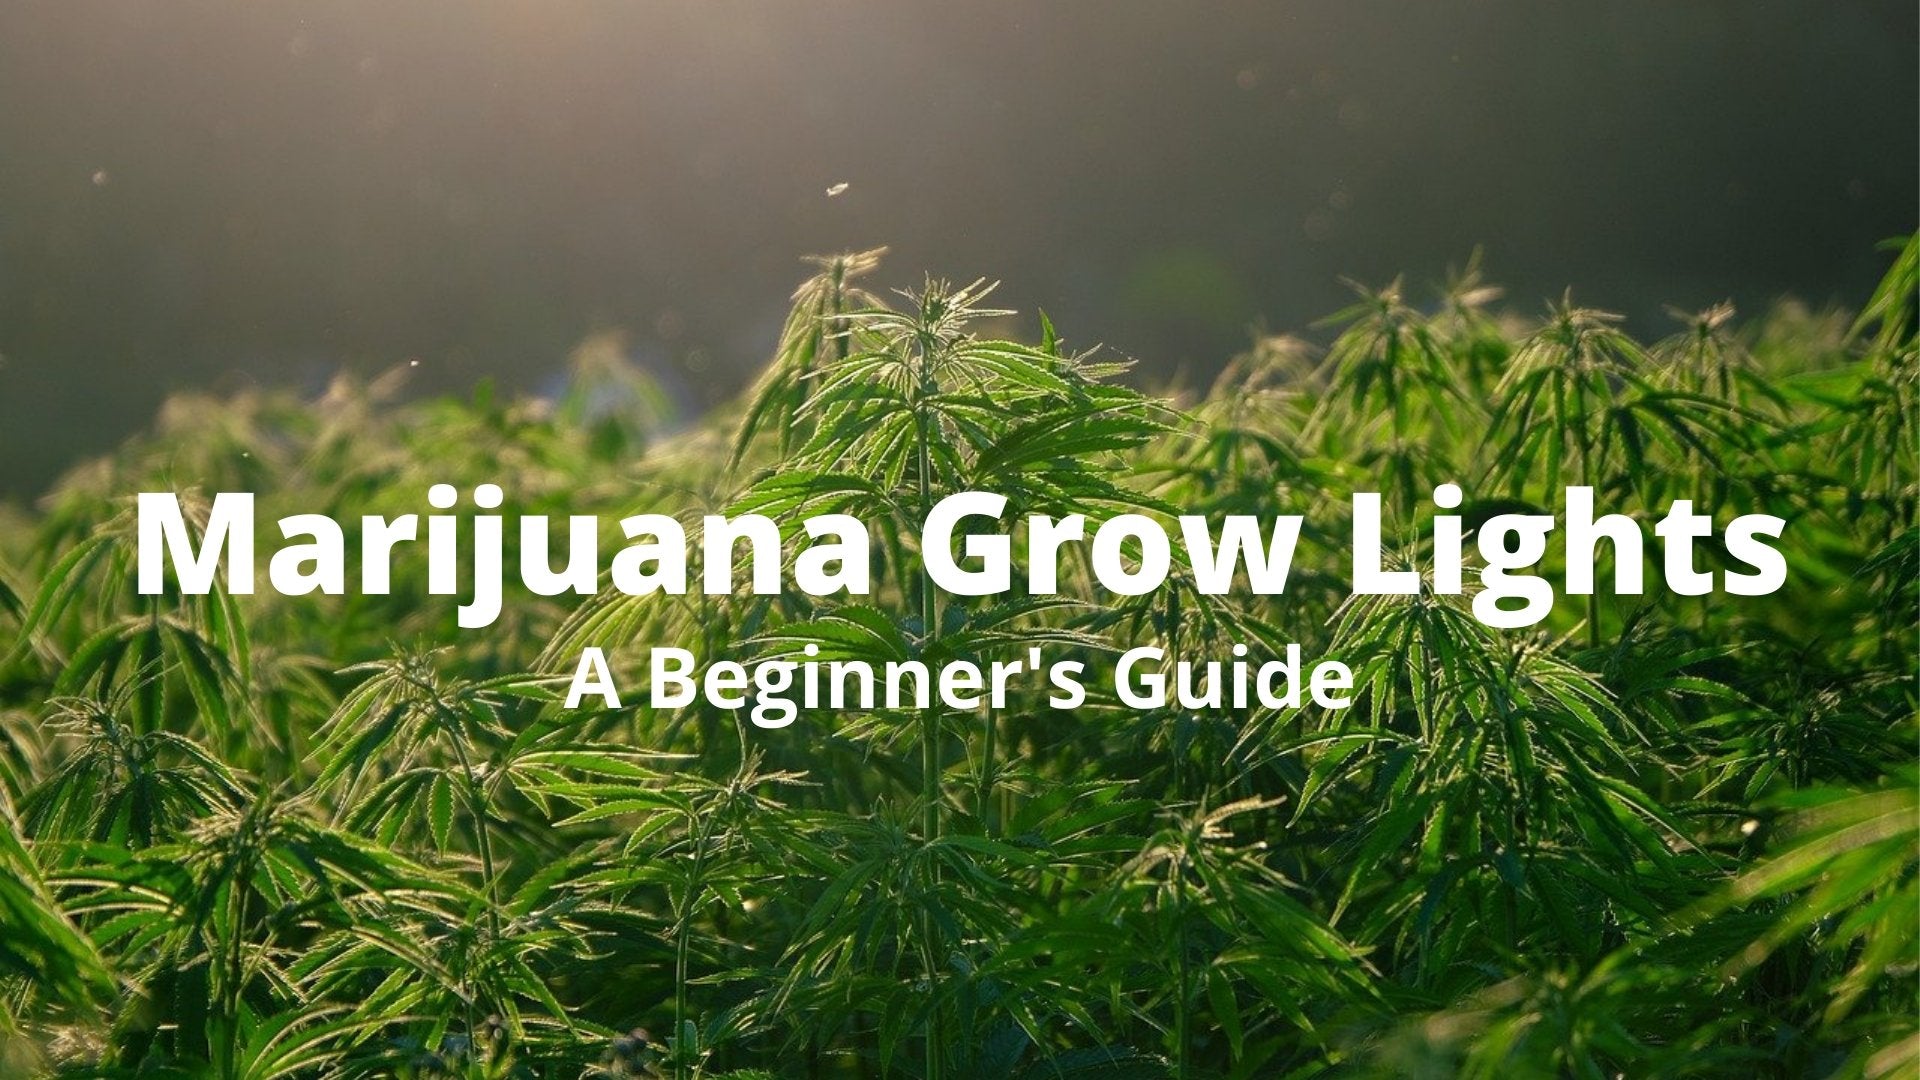 A Beginner's Guide To Marijuana Grow Lights - The Hippie House